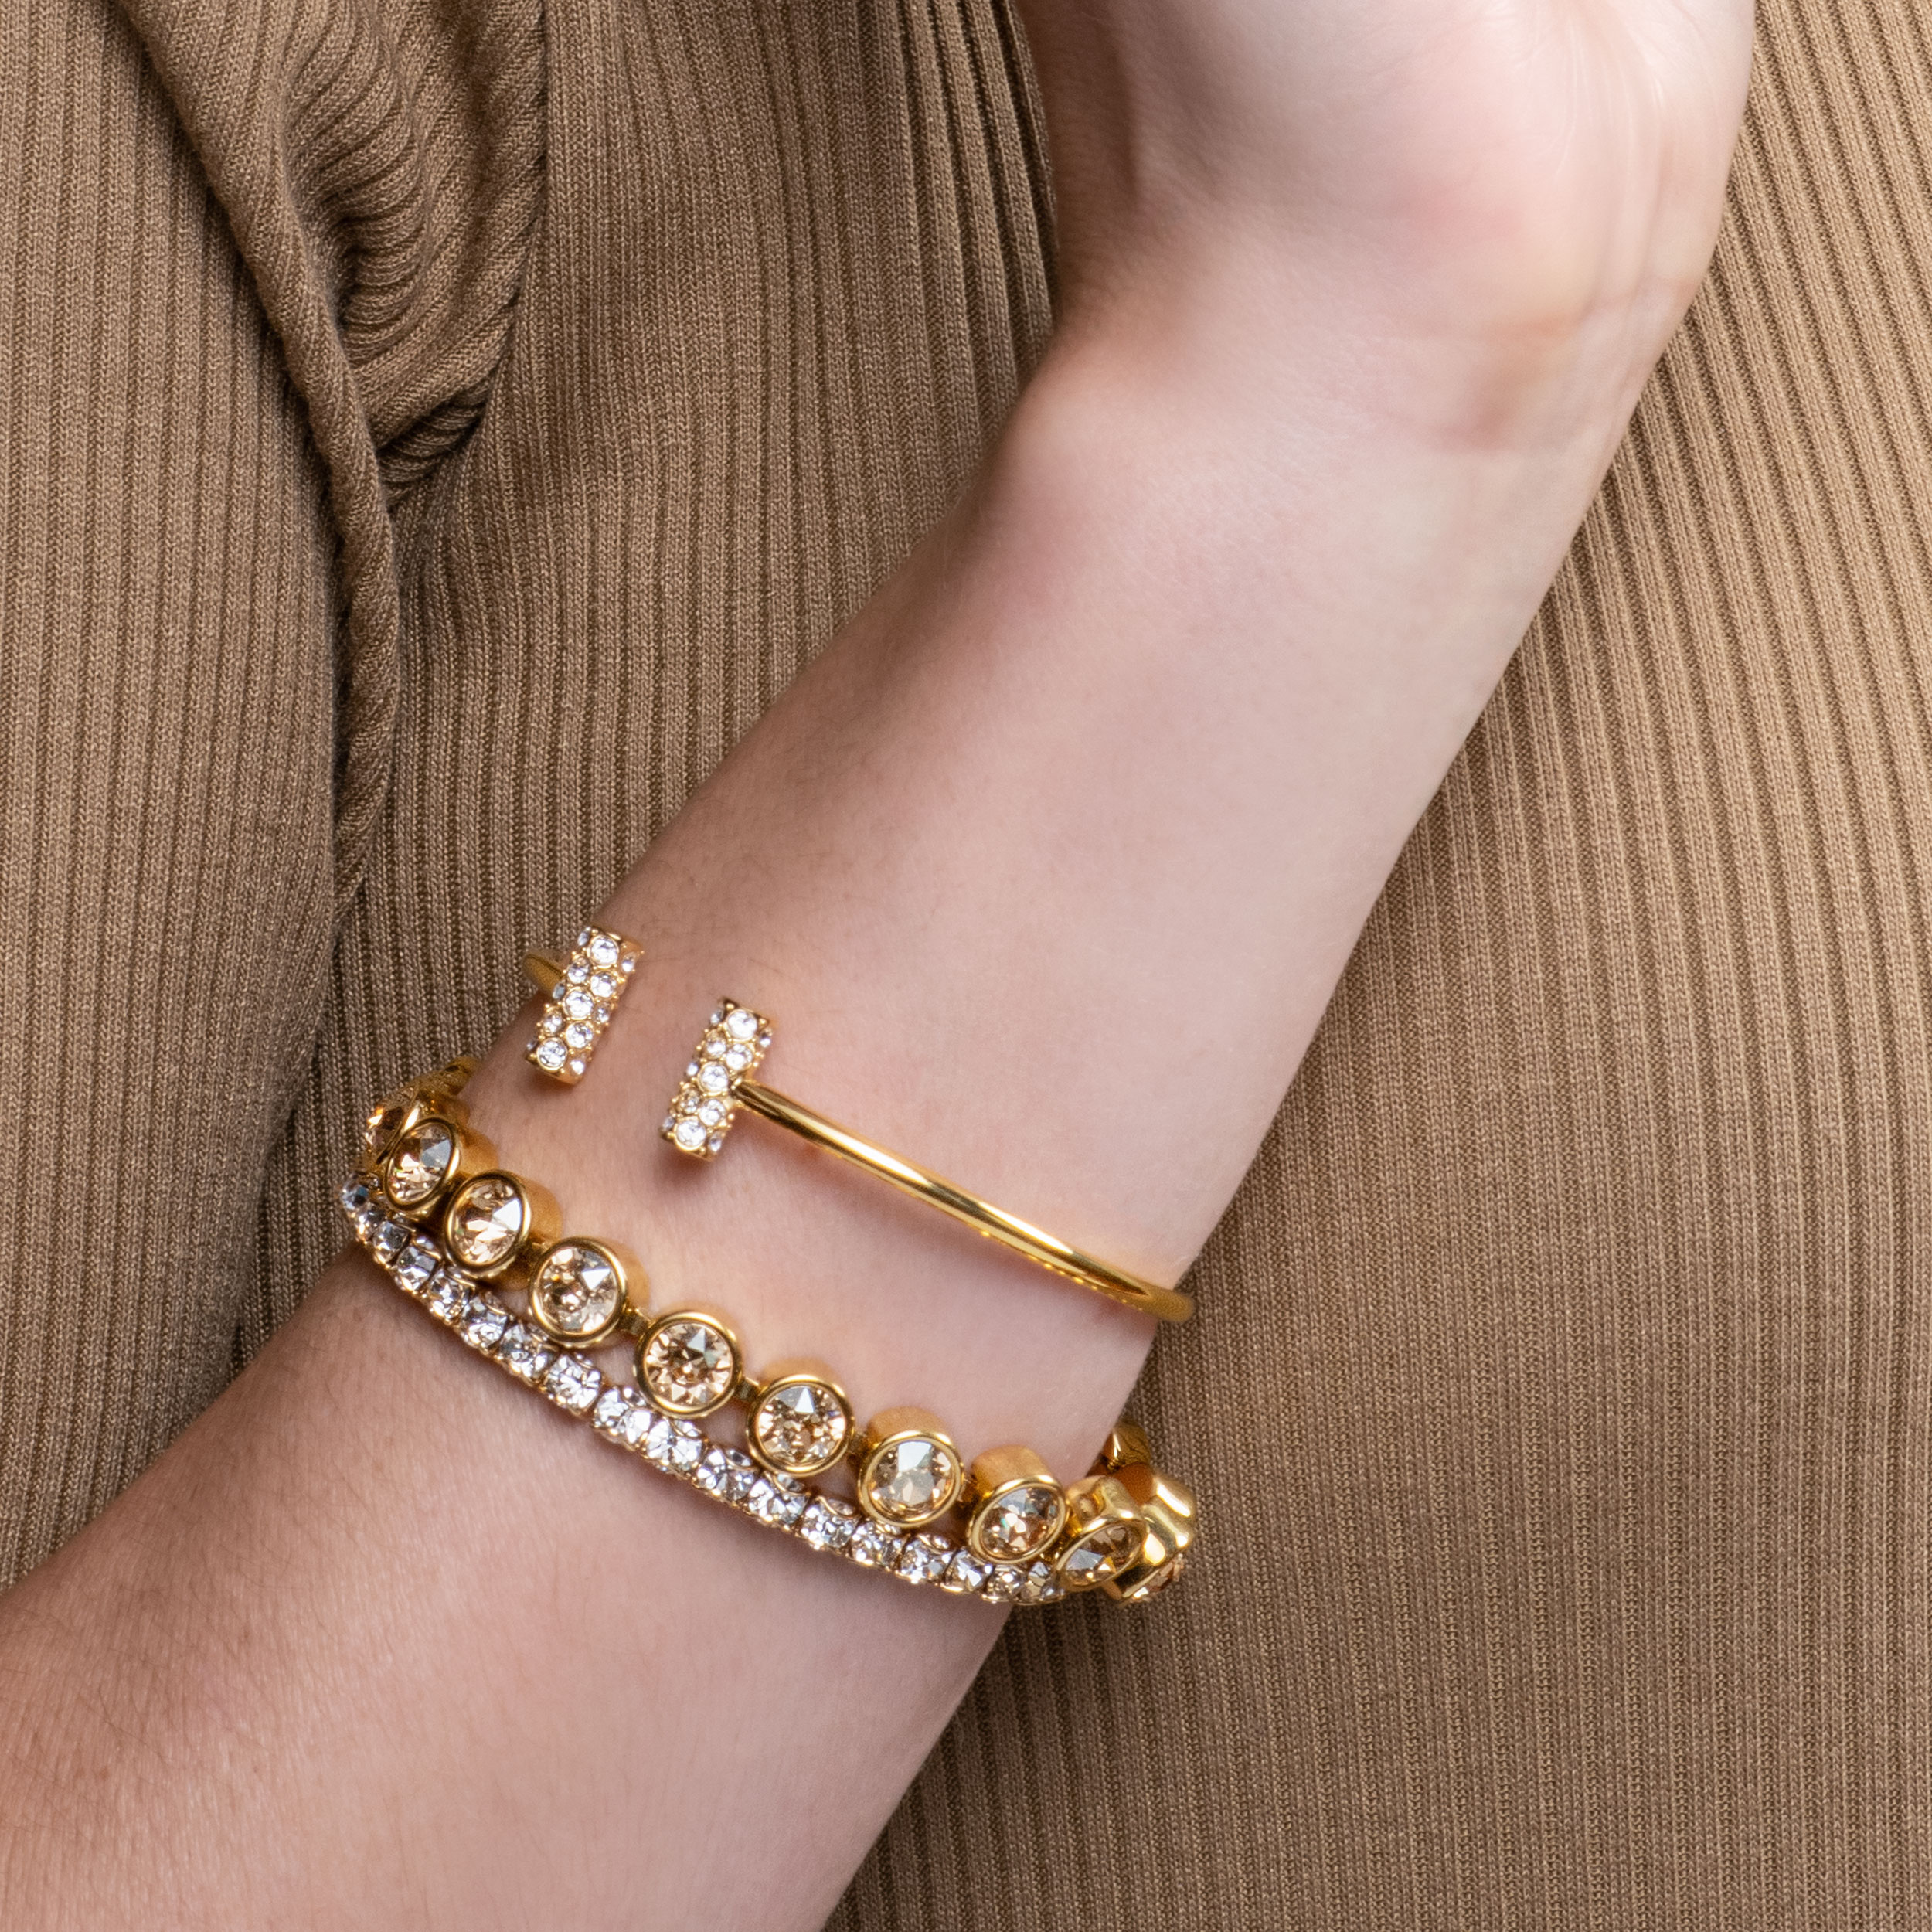 Samoyed Jewelry  Gold Bracelet by Touchstone 